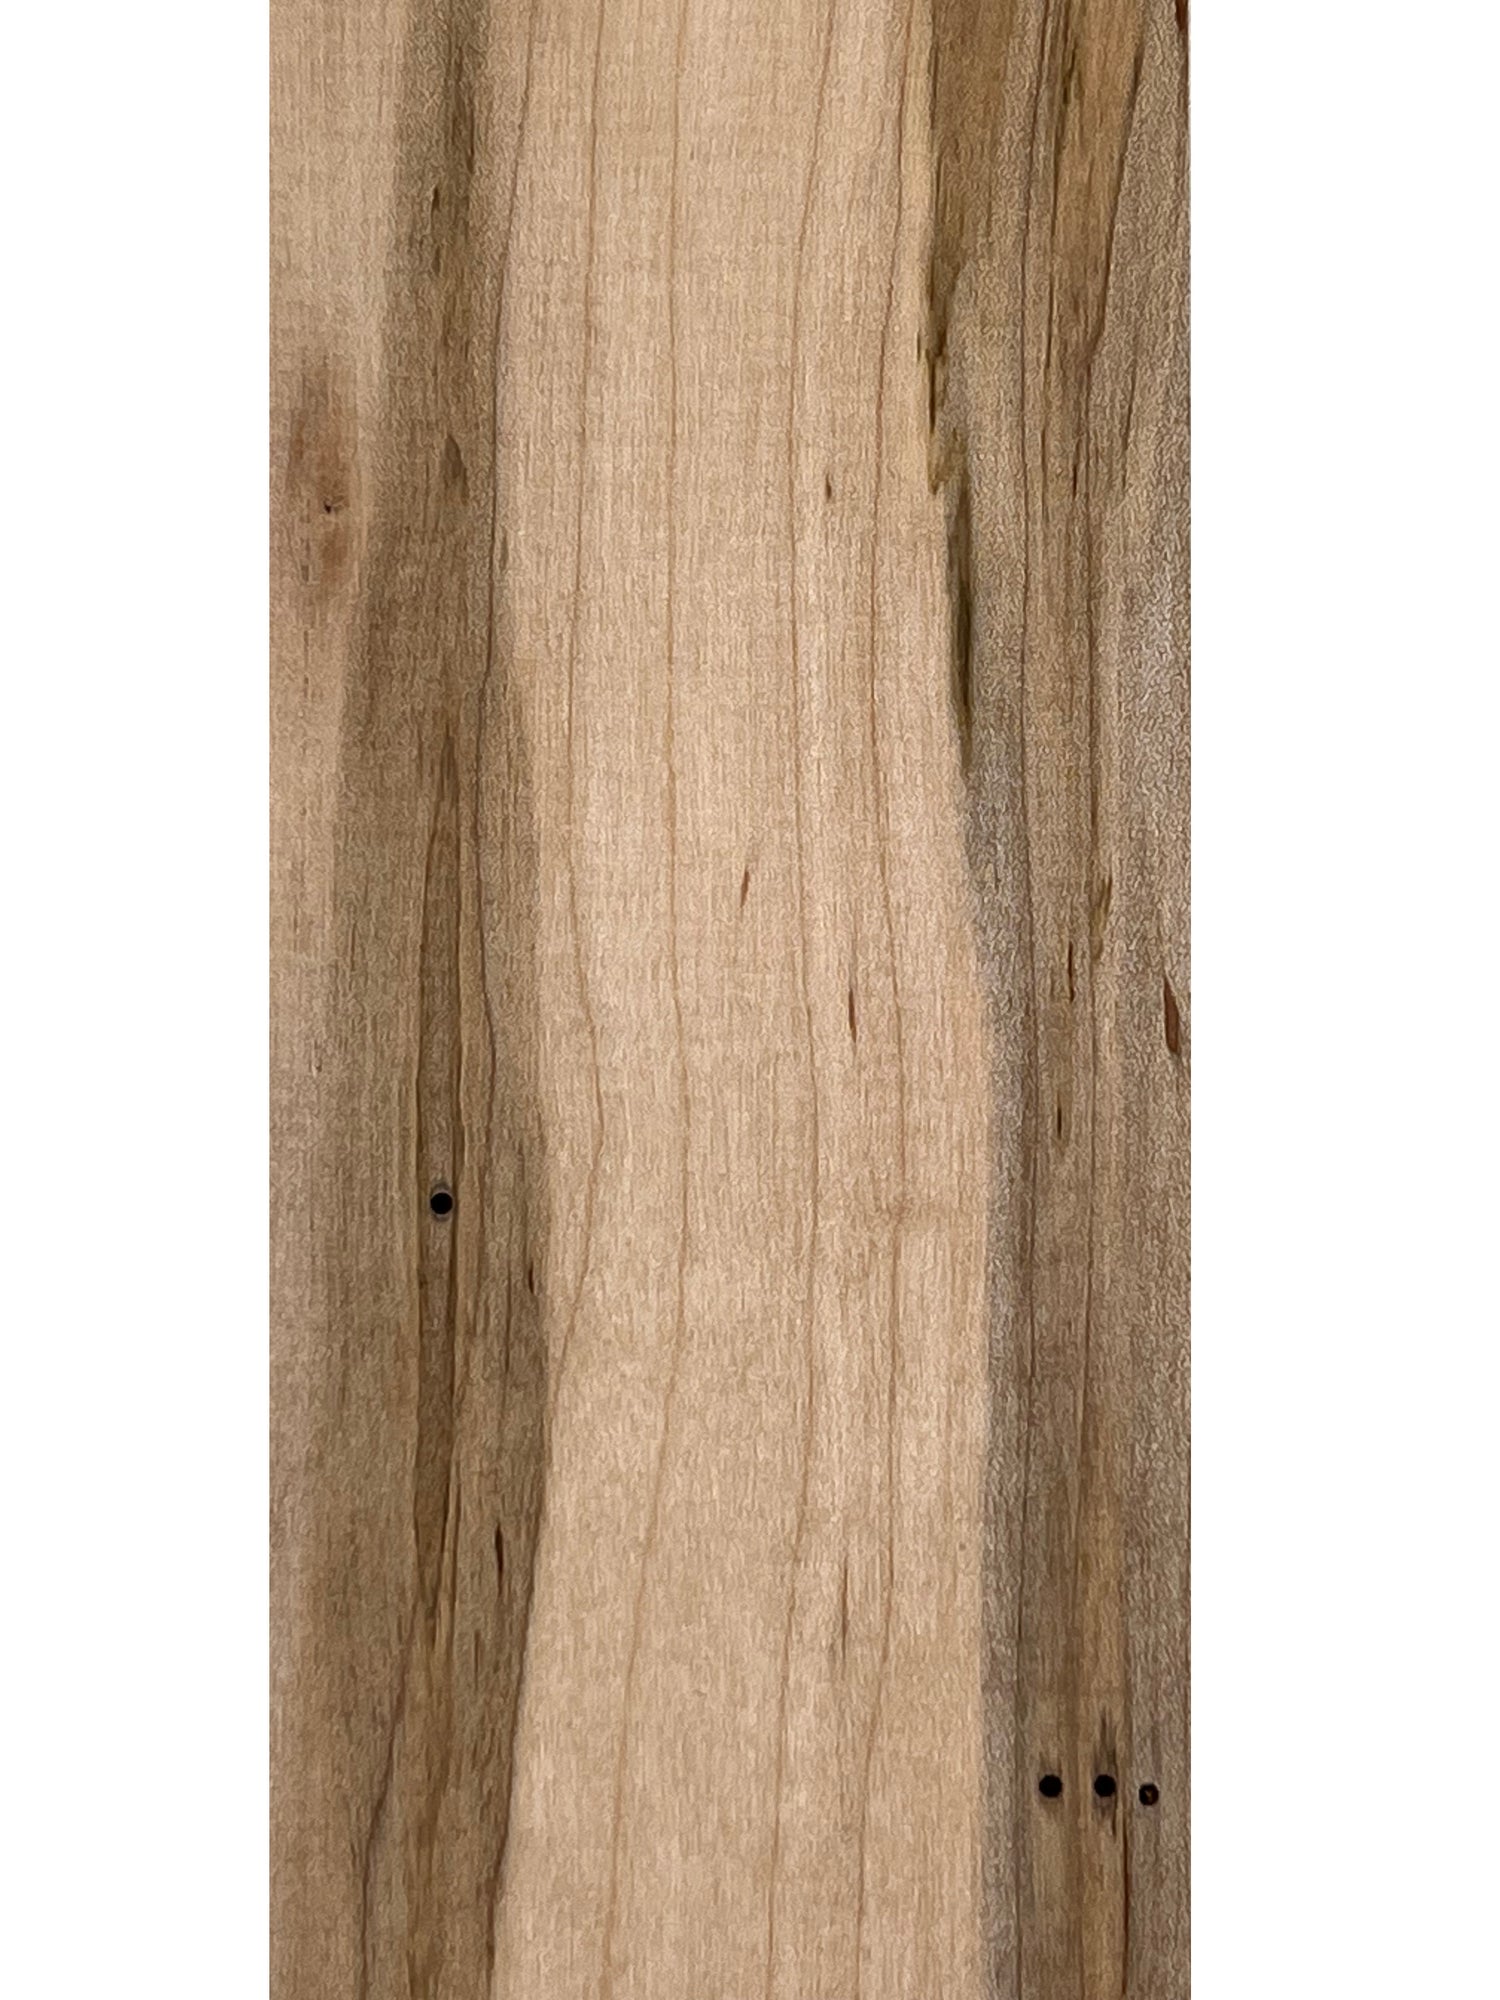 Ambrosia Maple Guitar Fingerboard Blank - Exotic Wood Zone - Buy online Across USA 